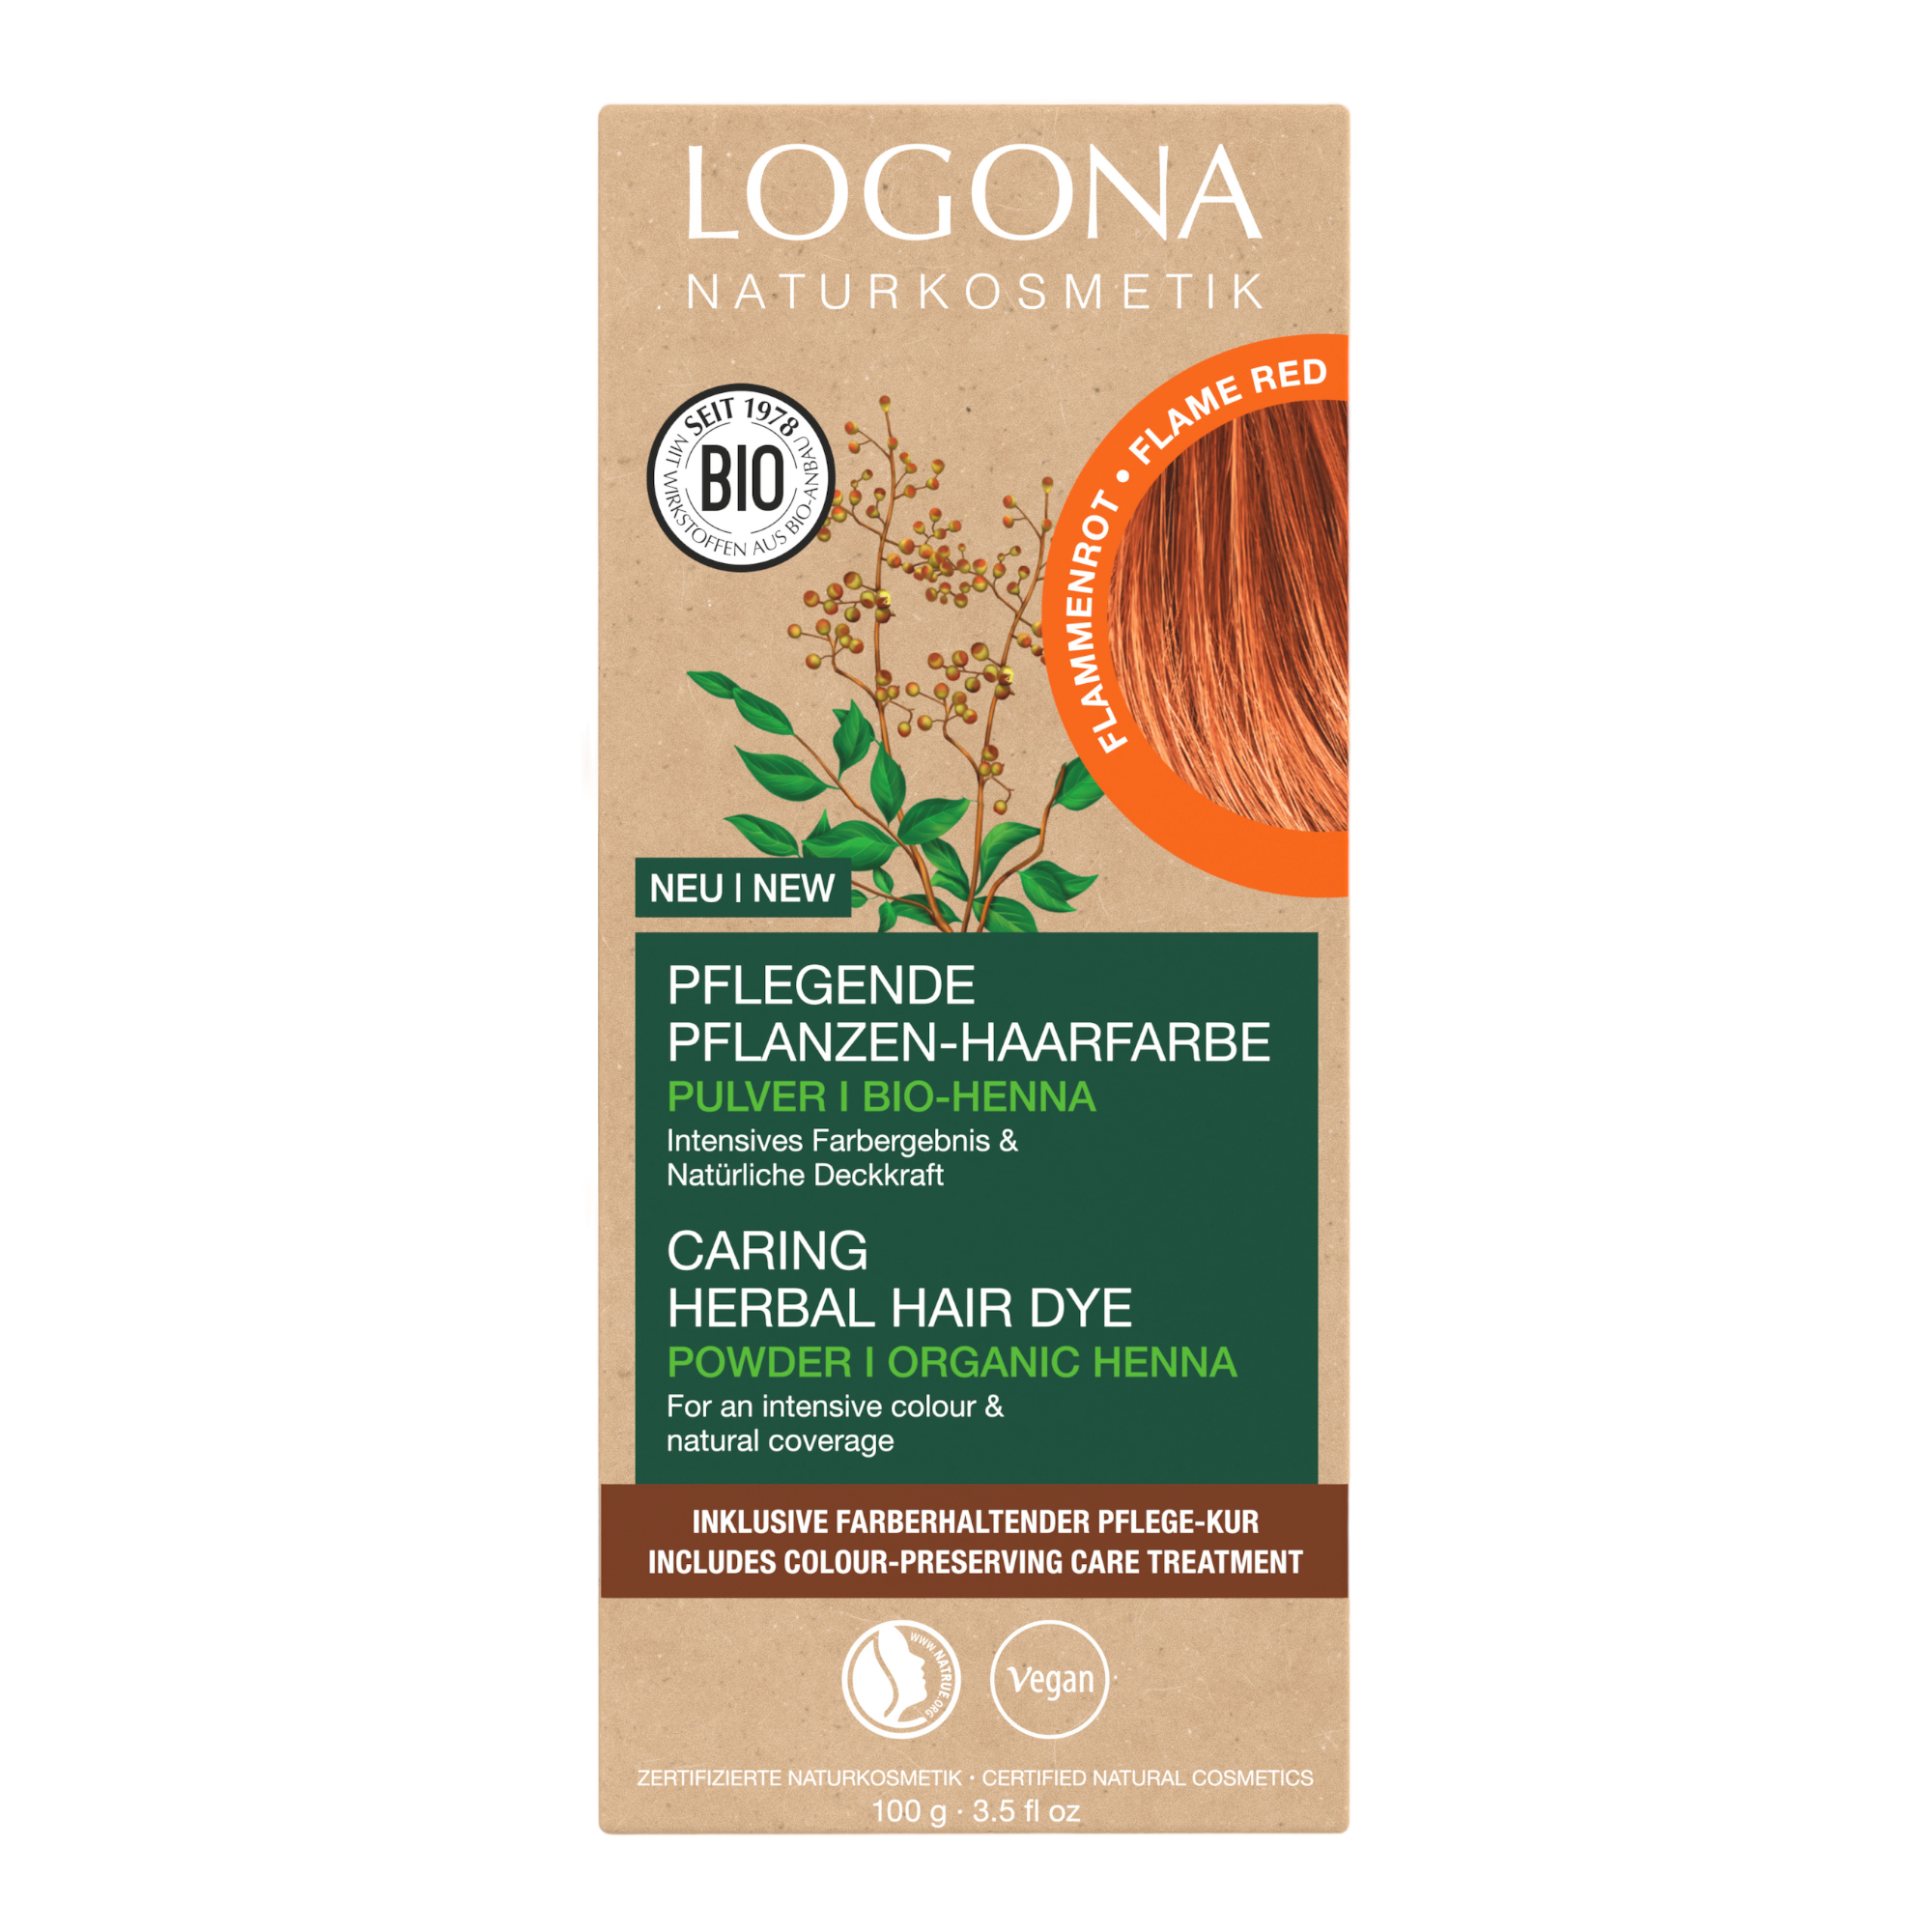 Organic Henna shampoo colorless 200ml by Styx Naturcosmetic